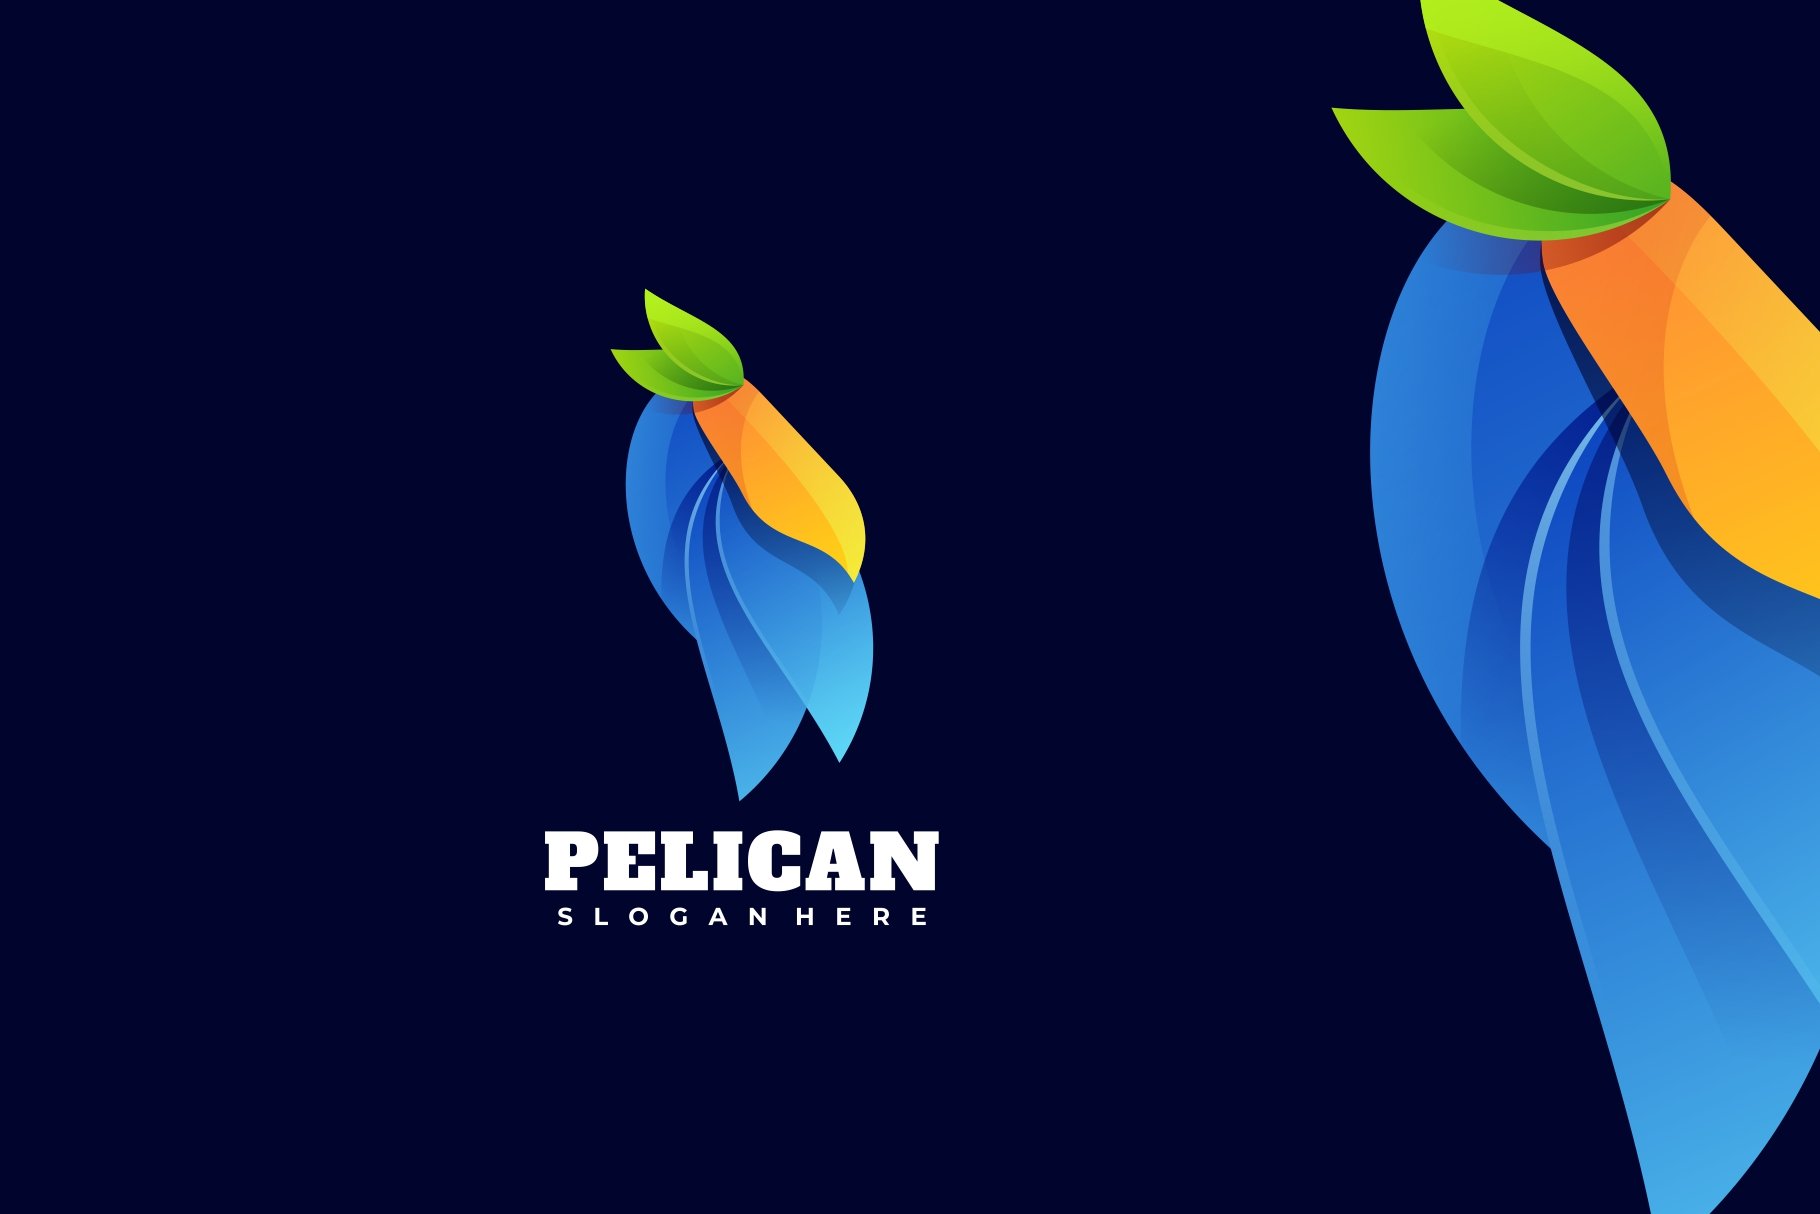 Pelican Gradient Colorful Logo cover image.